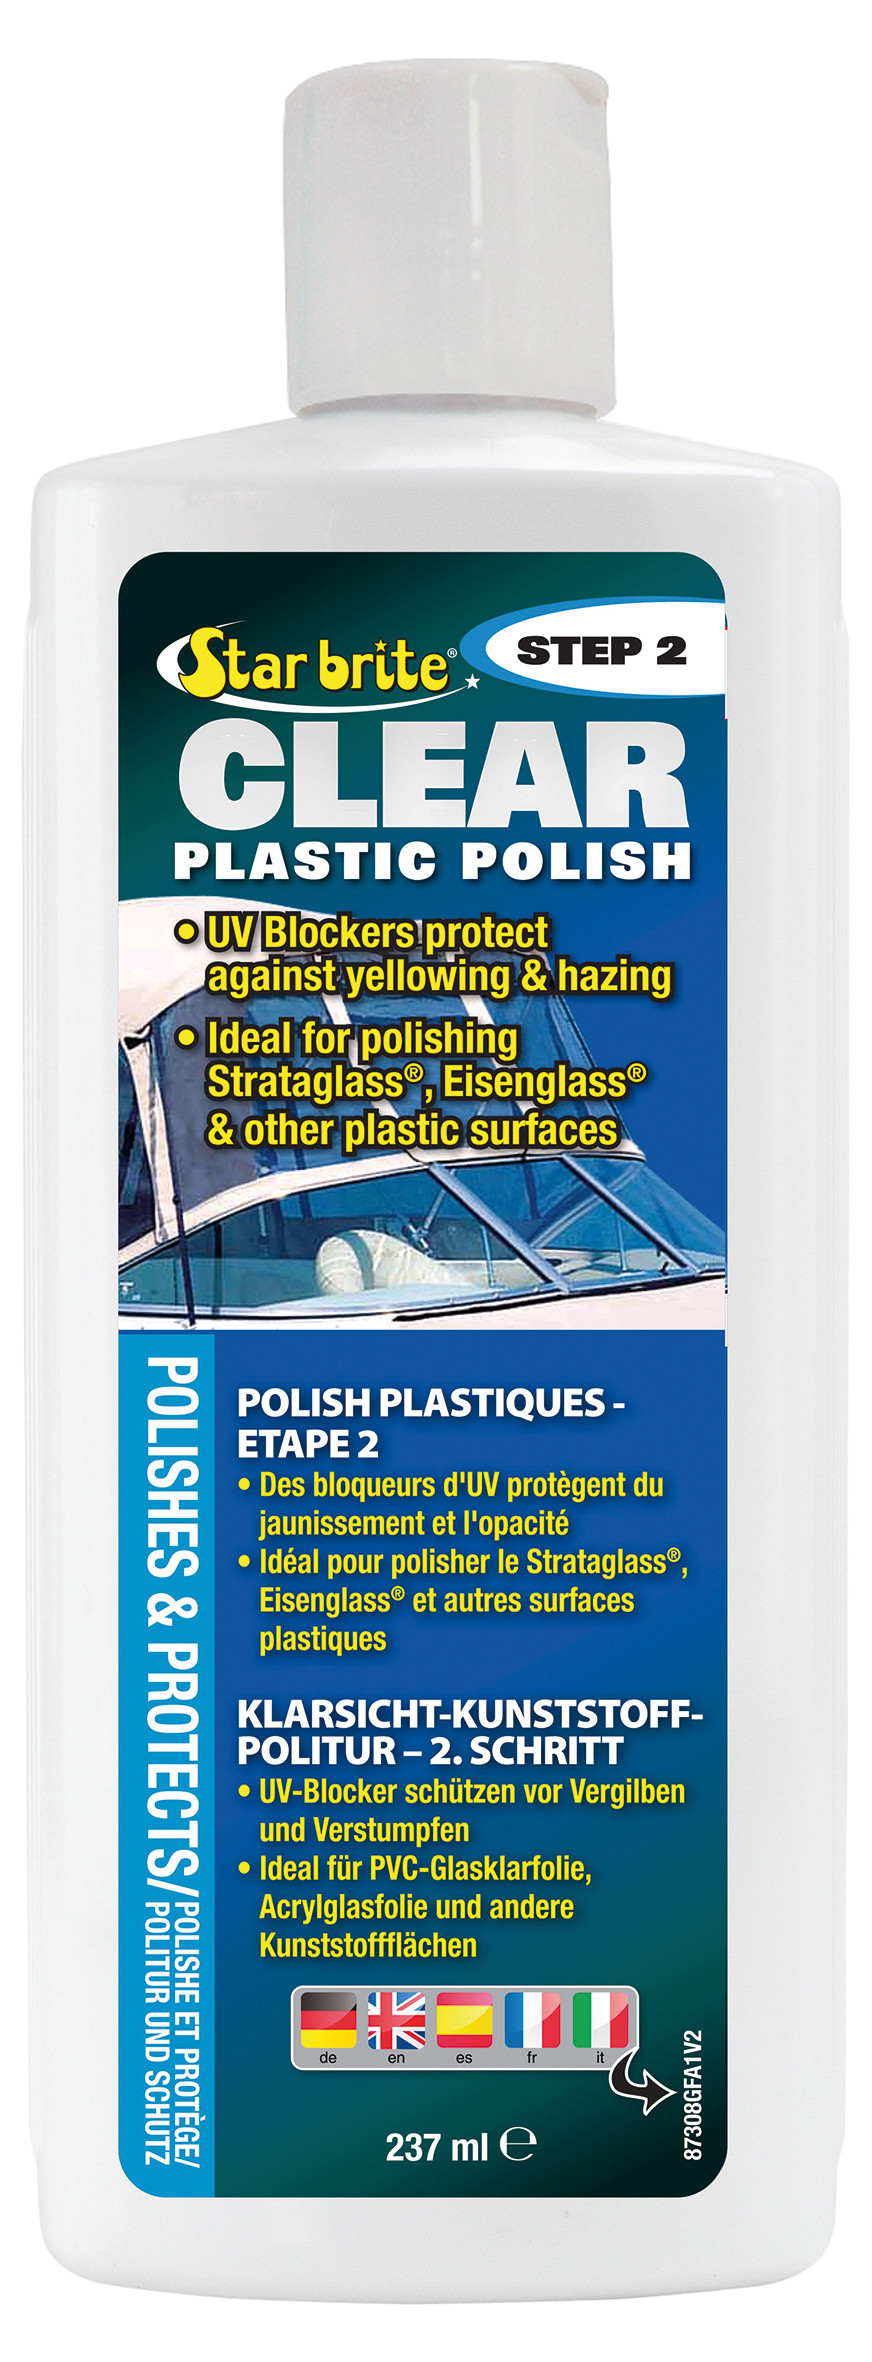 Plastic Polish Restorer 250ml